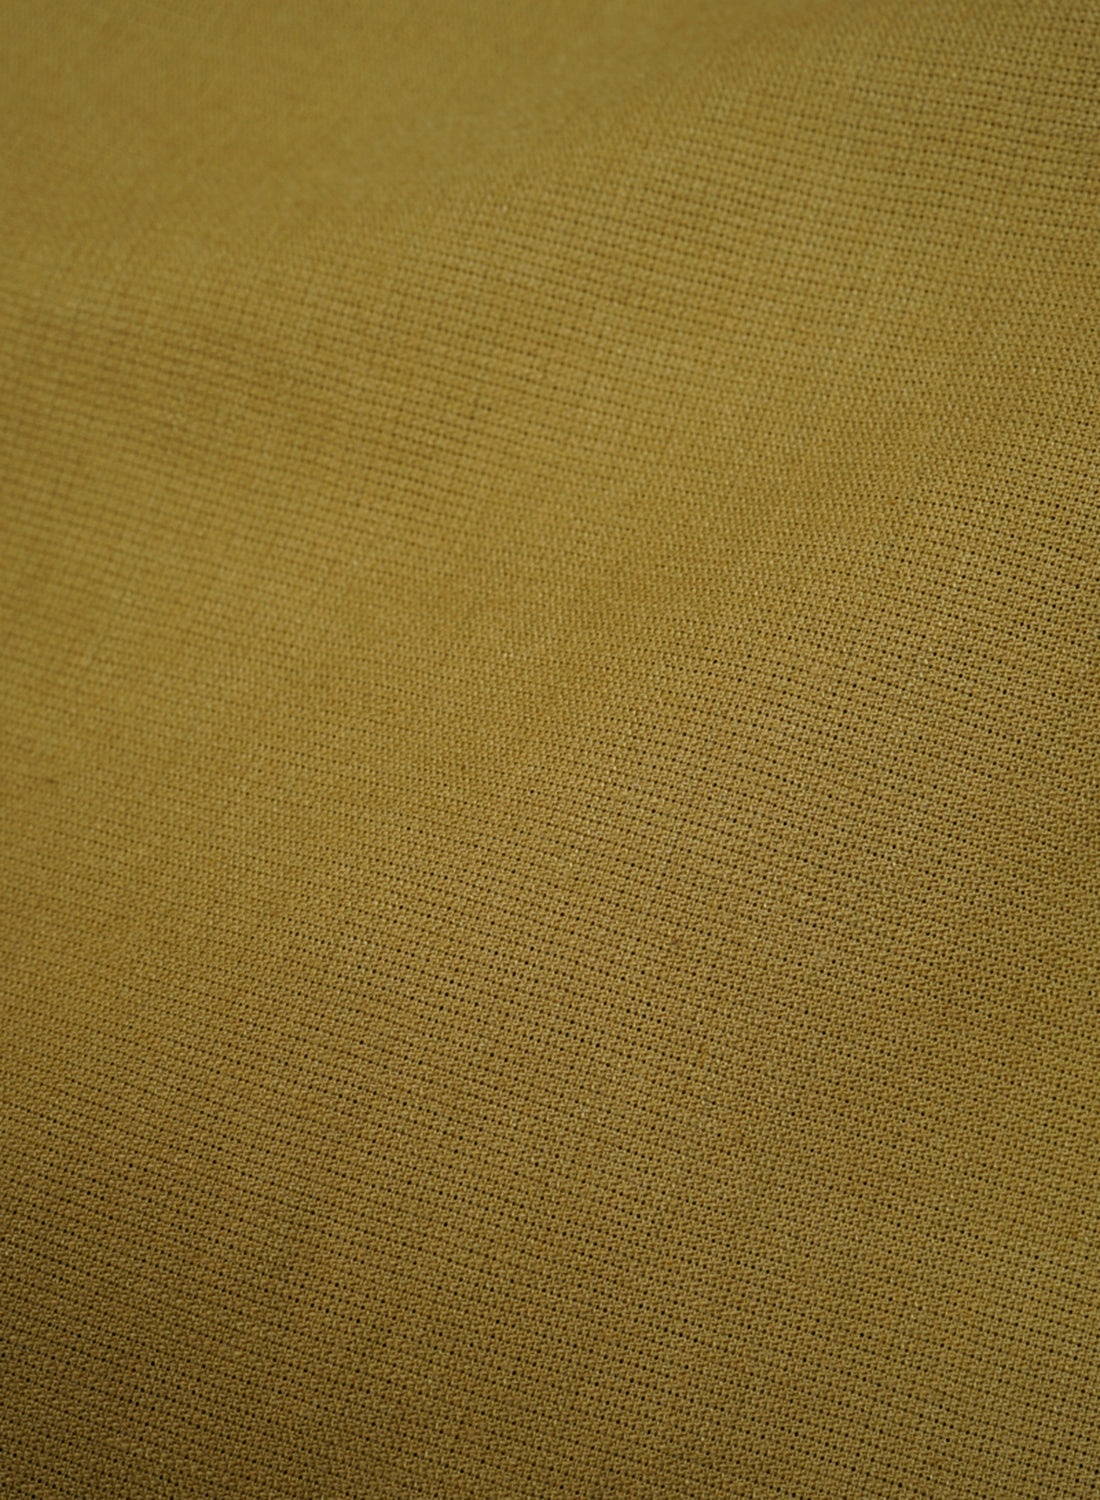 Army Shirt Fade Cloth in Khaki - 8